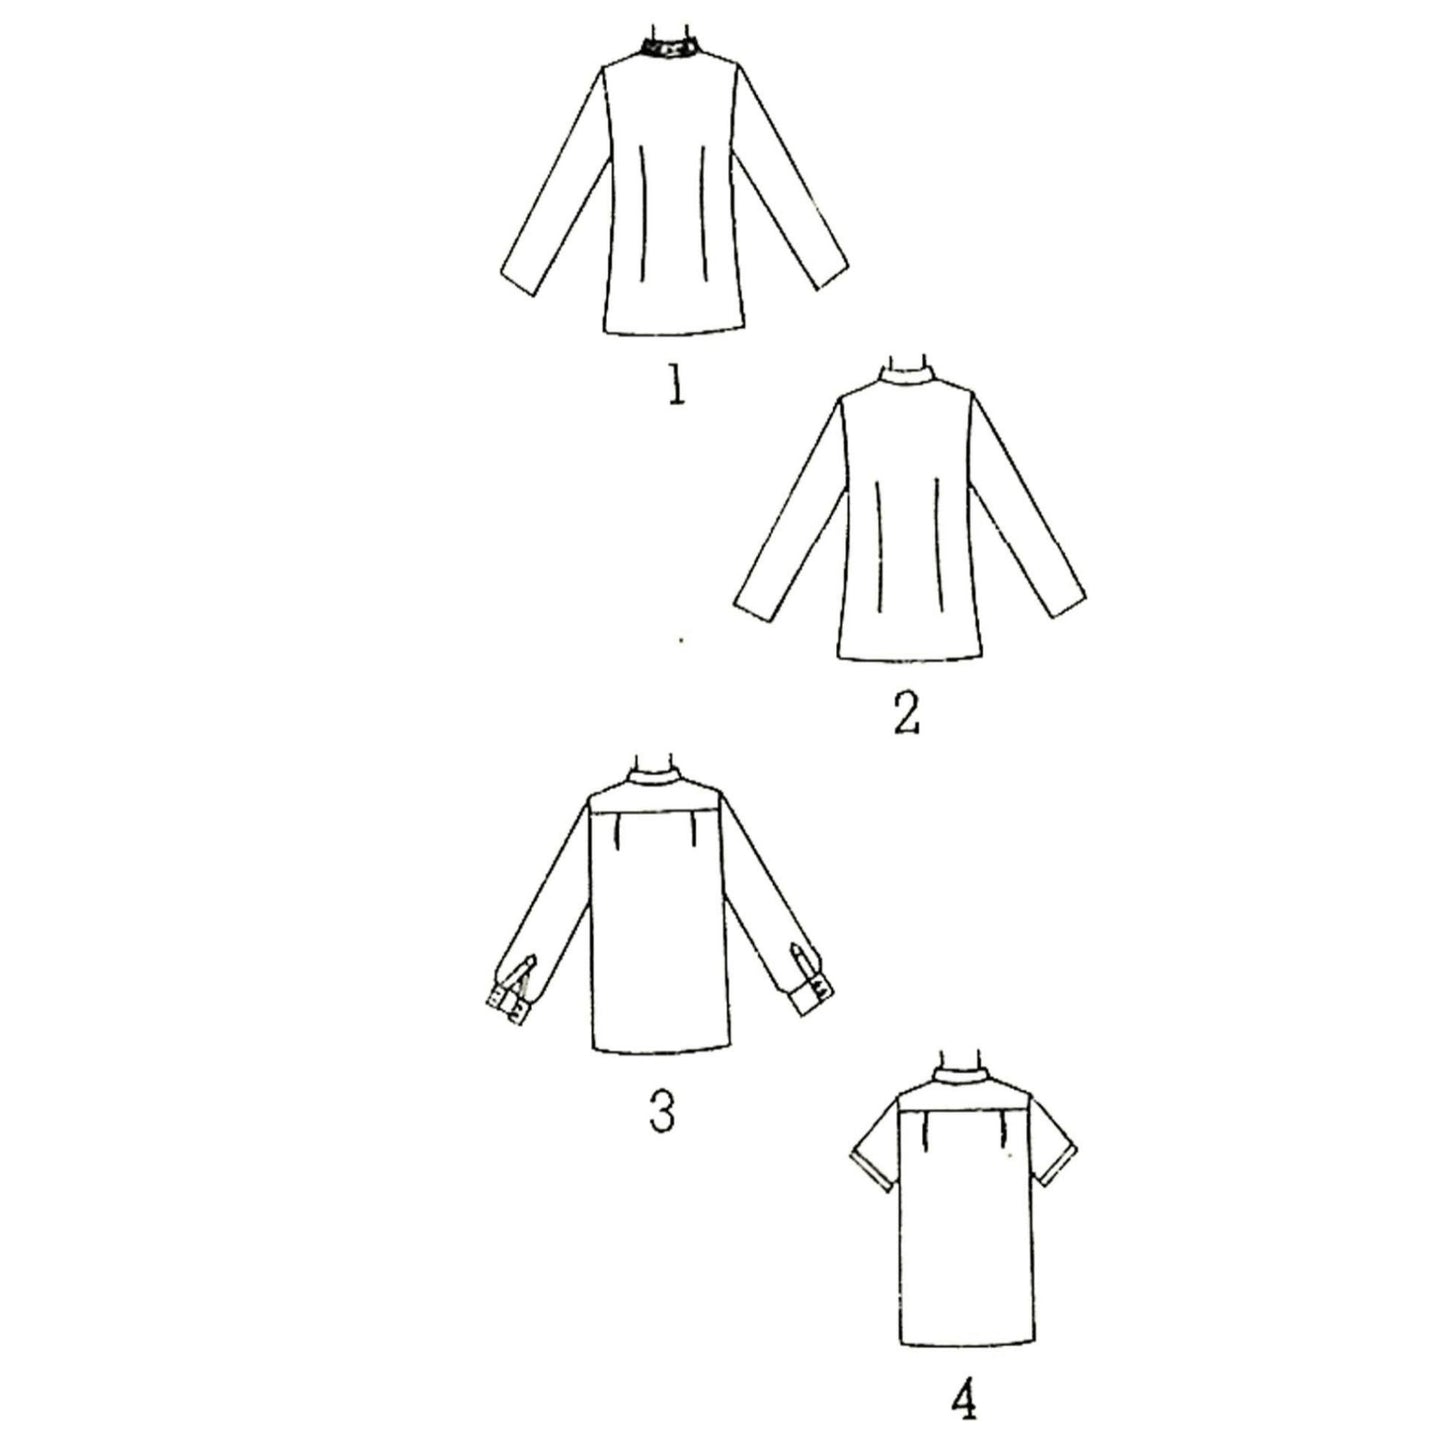 1960s Pattern, Men's Nehru Jacket - Multi sizes 0 lined back drawings